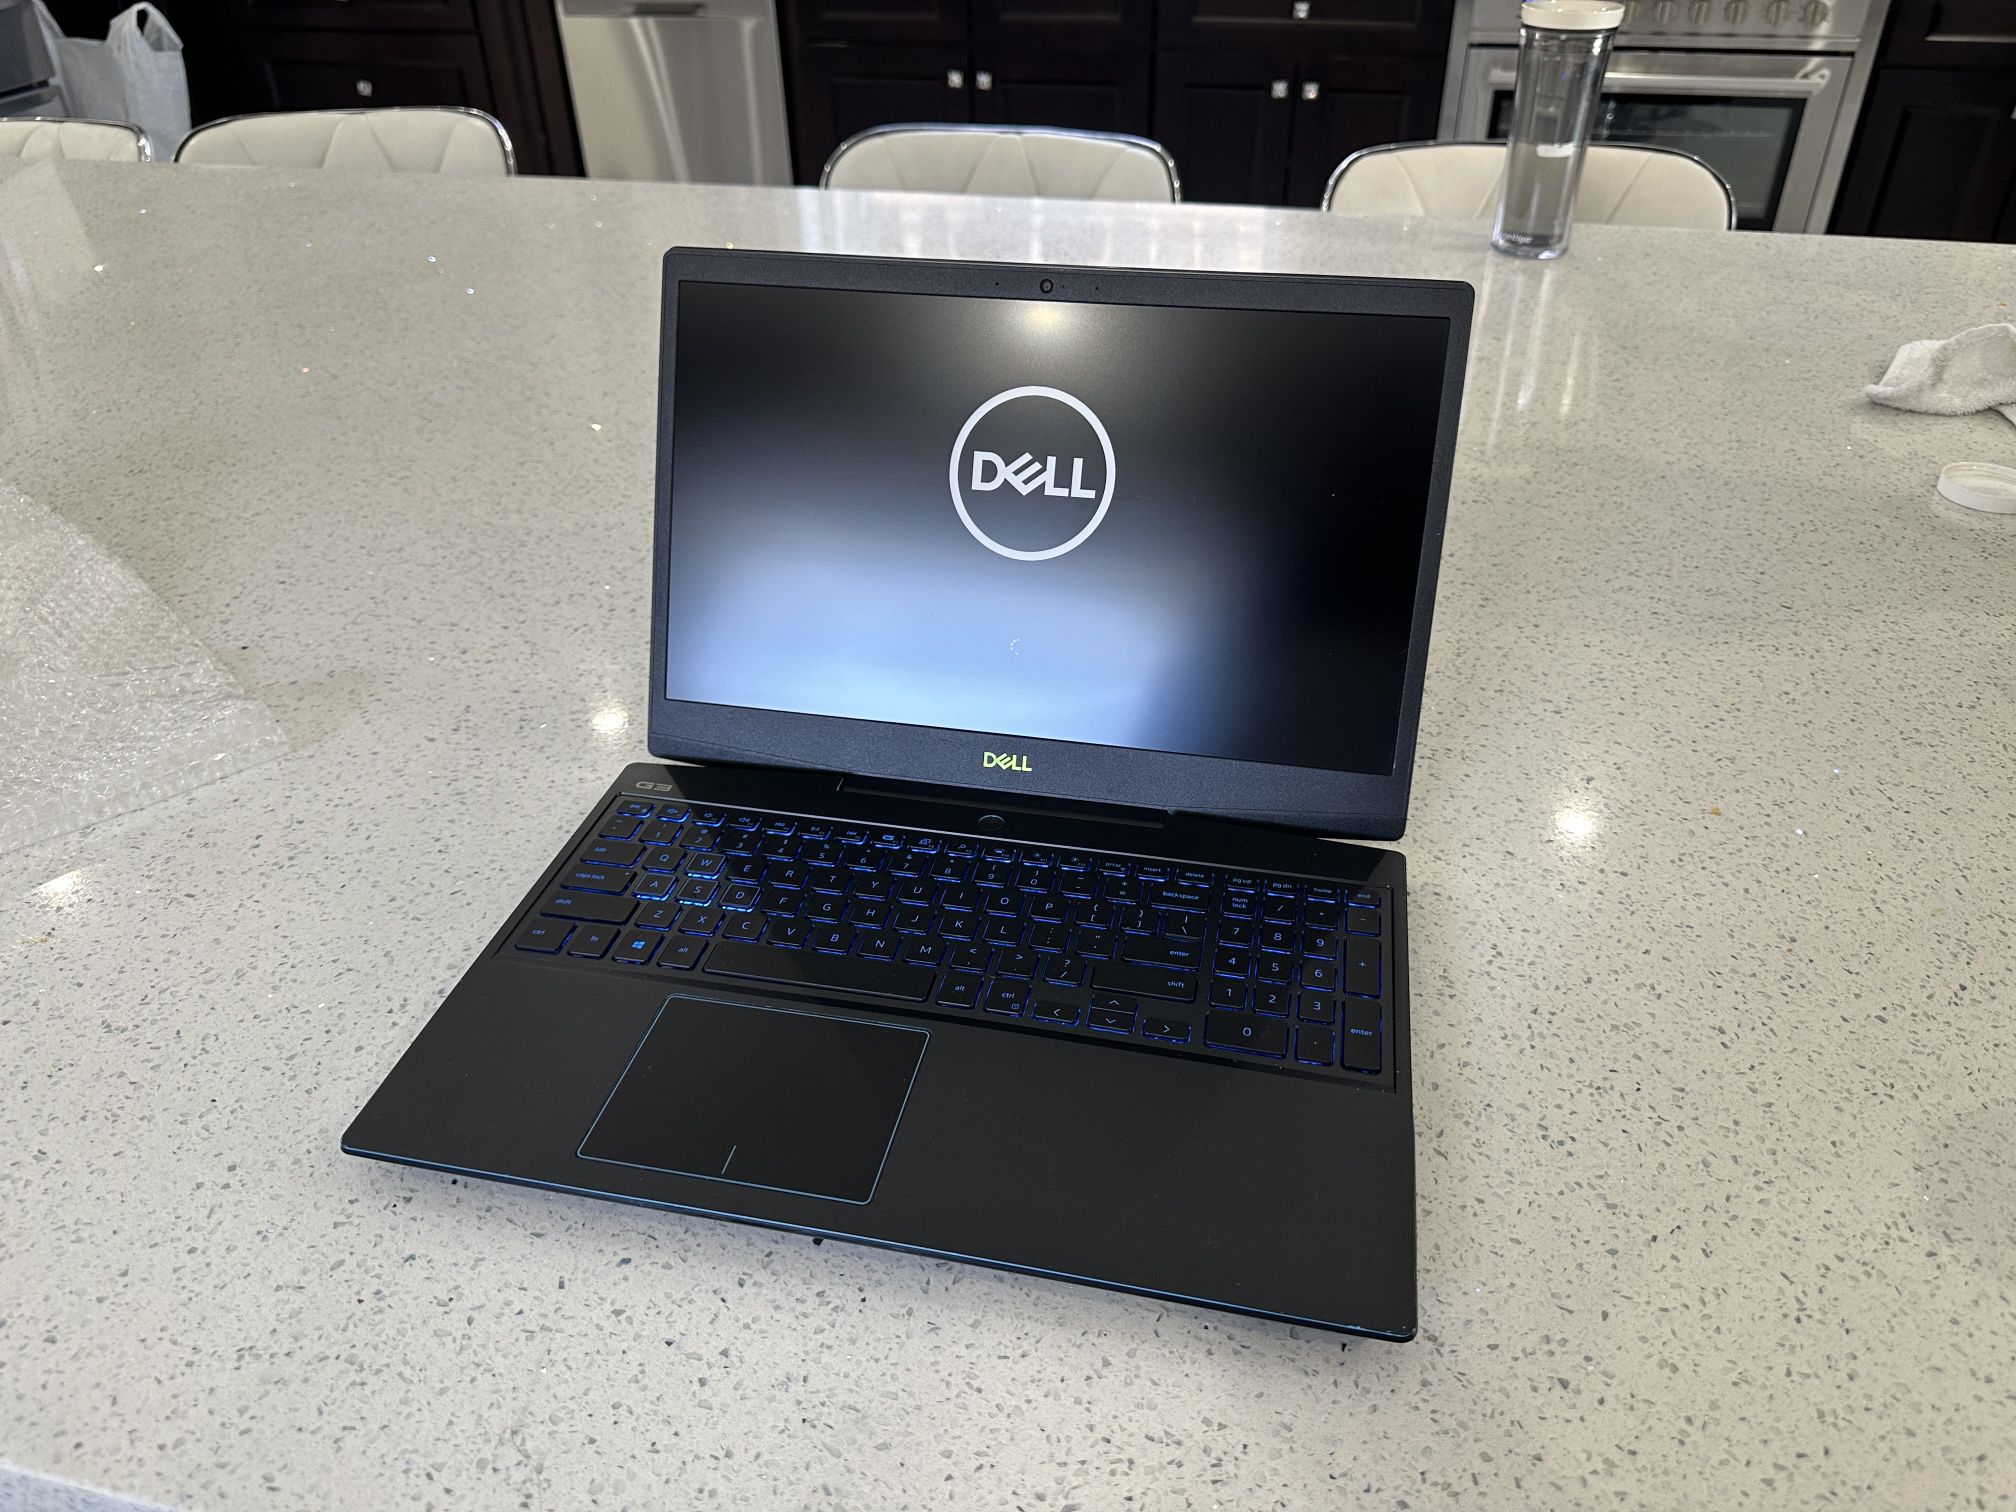 Dell G3 3500 15.6” I5-10300h Gaming Laptop